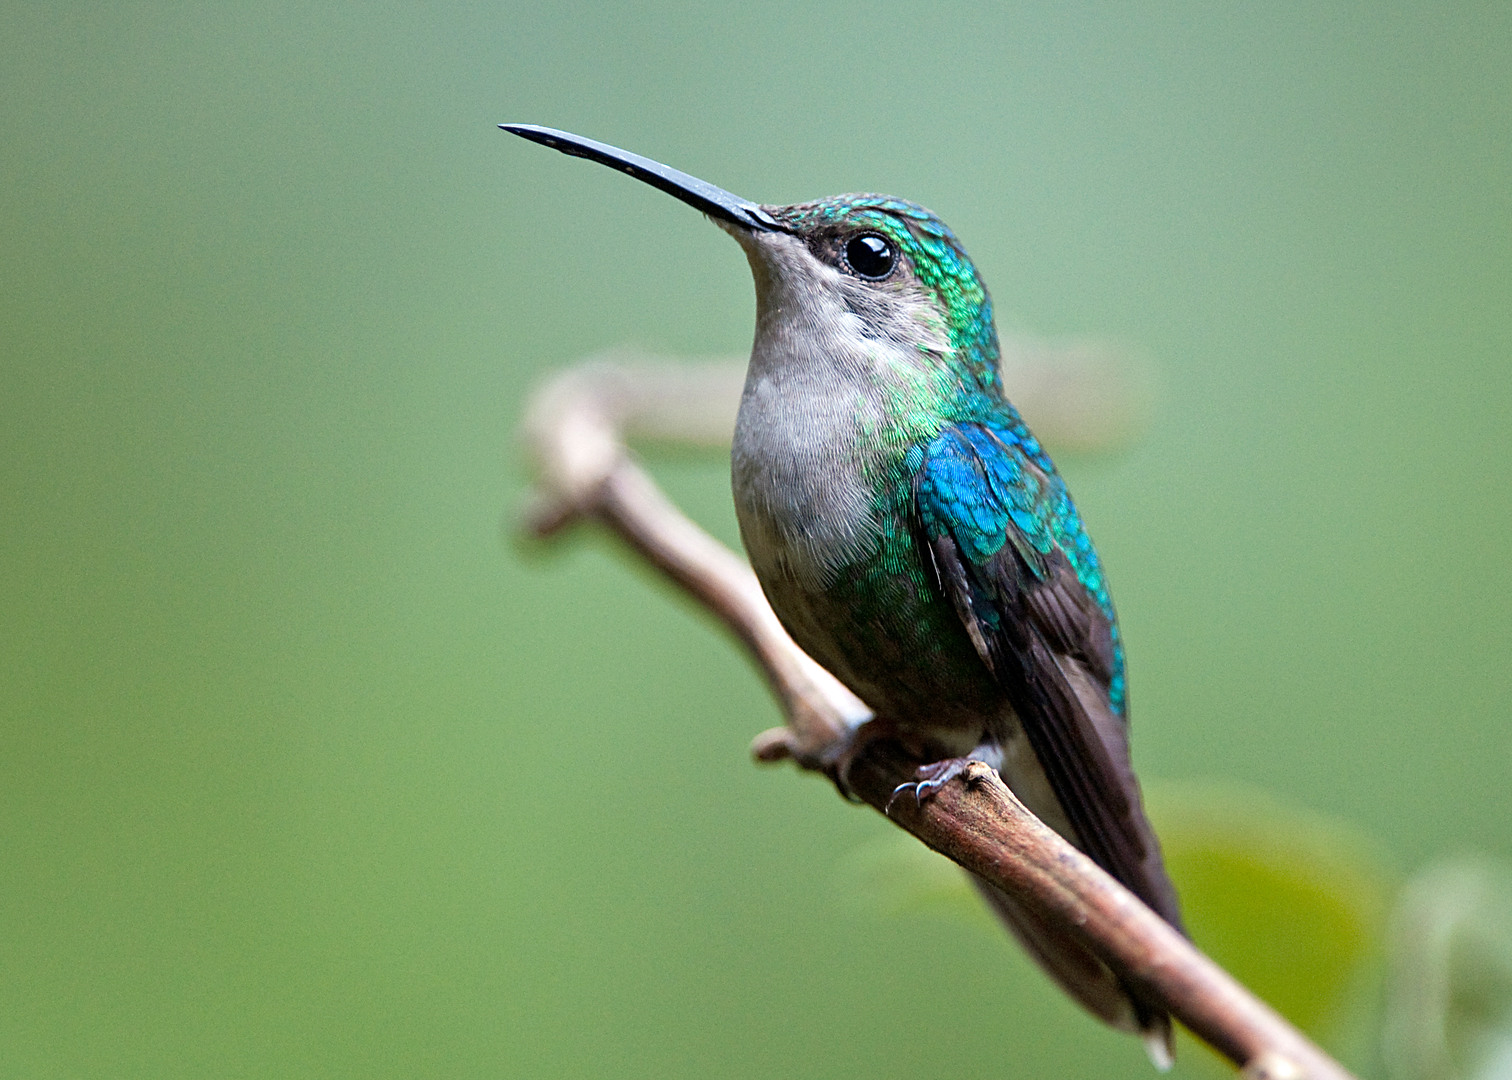 One of the Many Hummingbirds